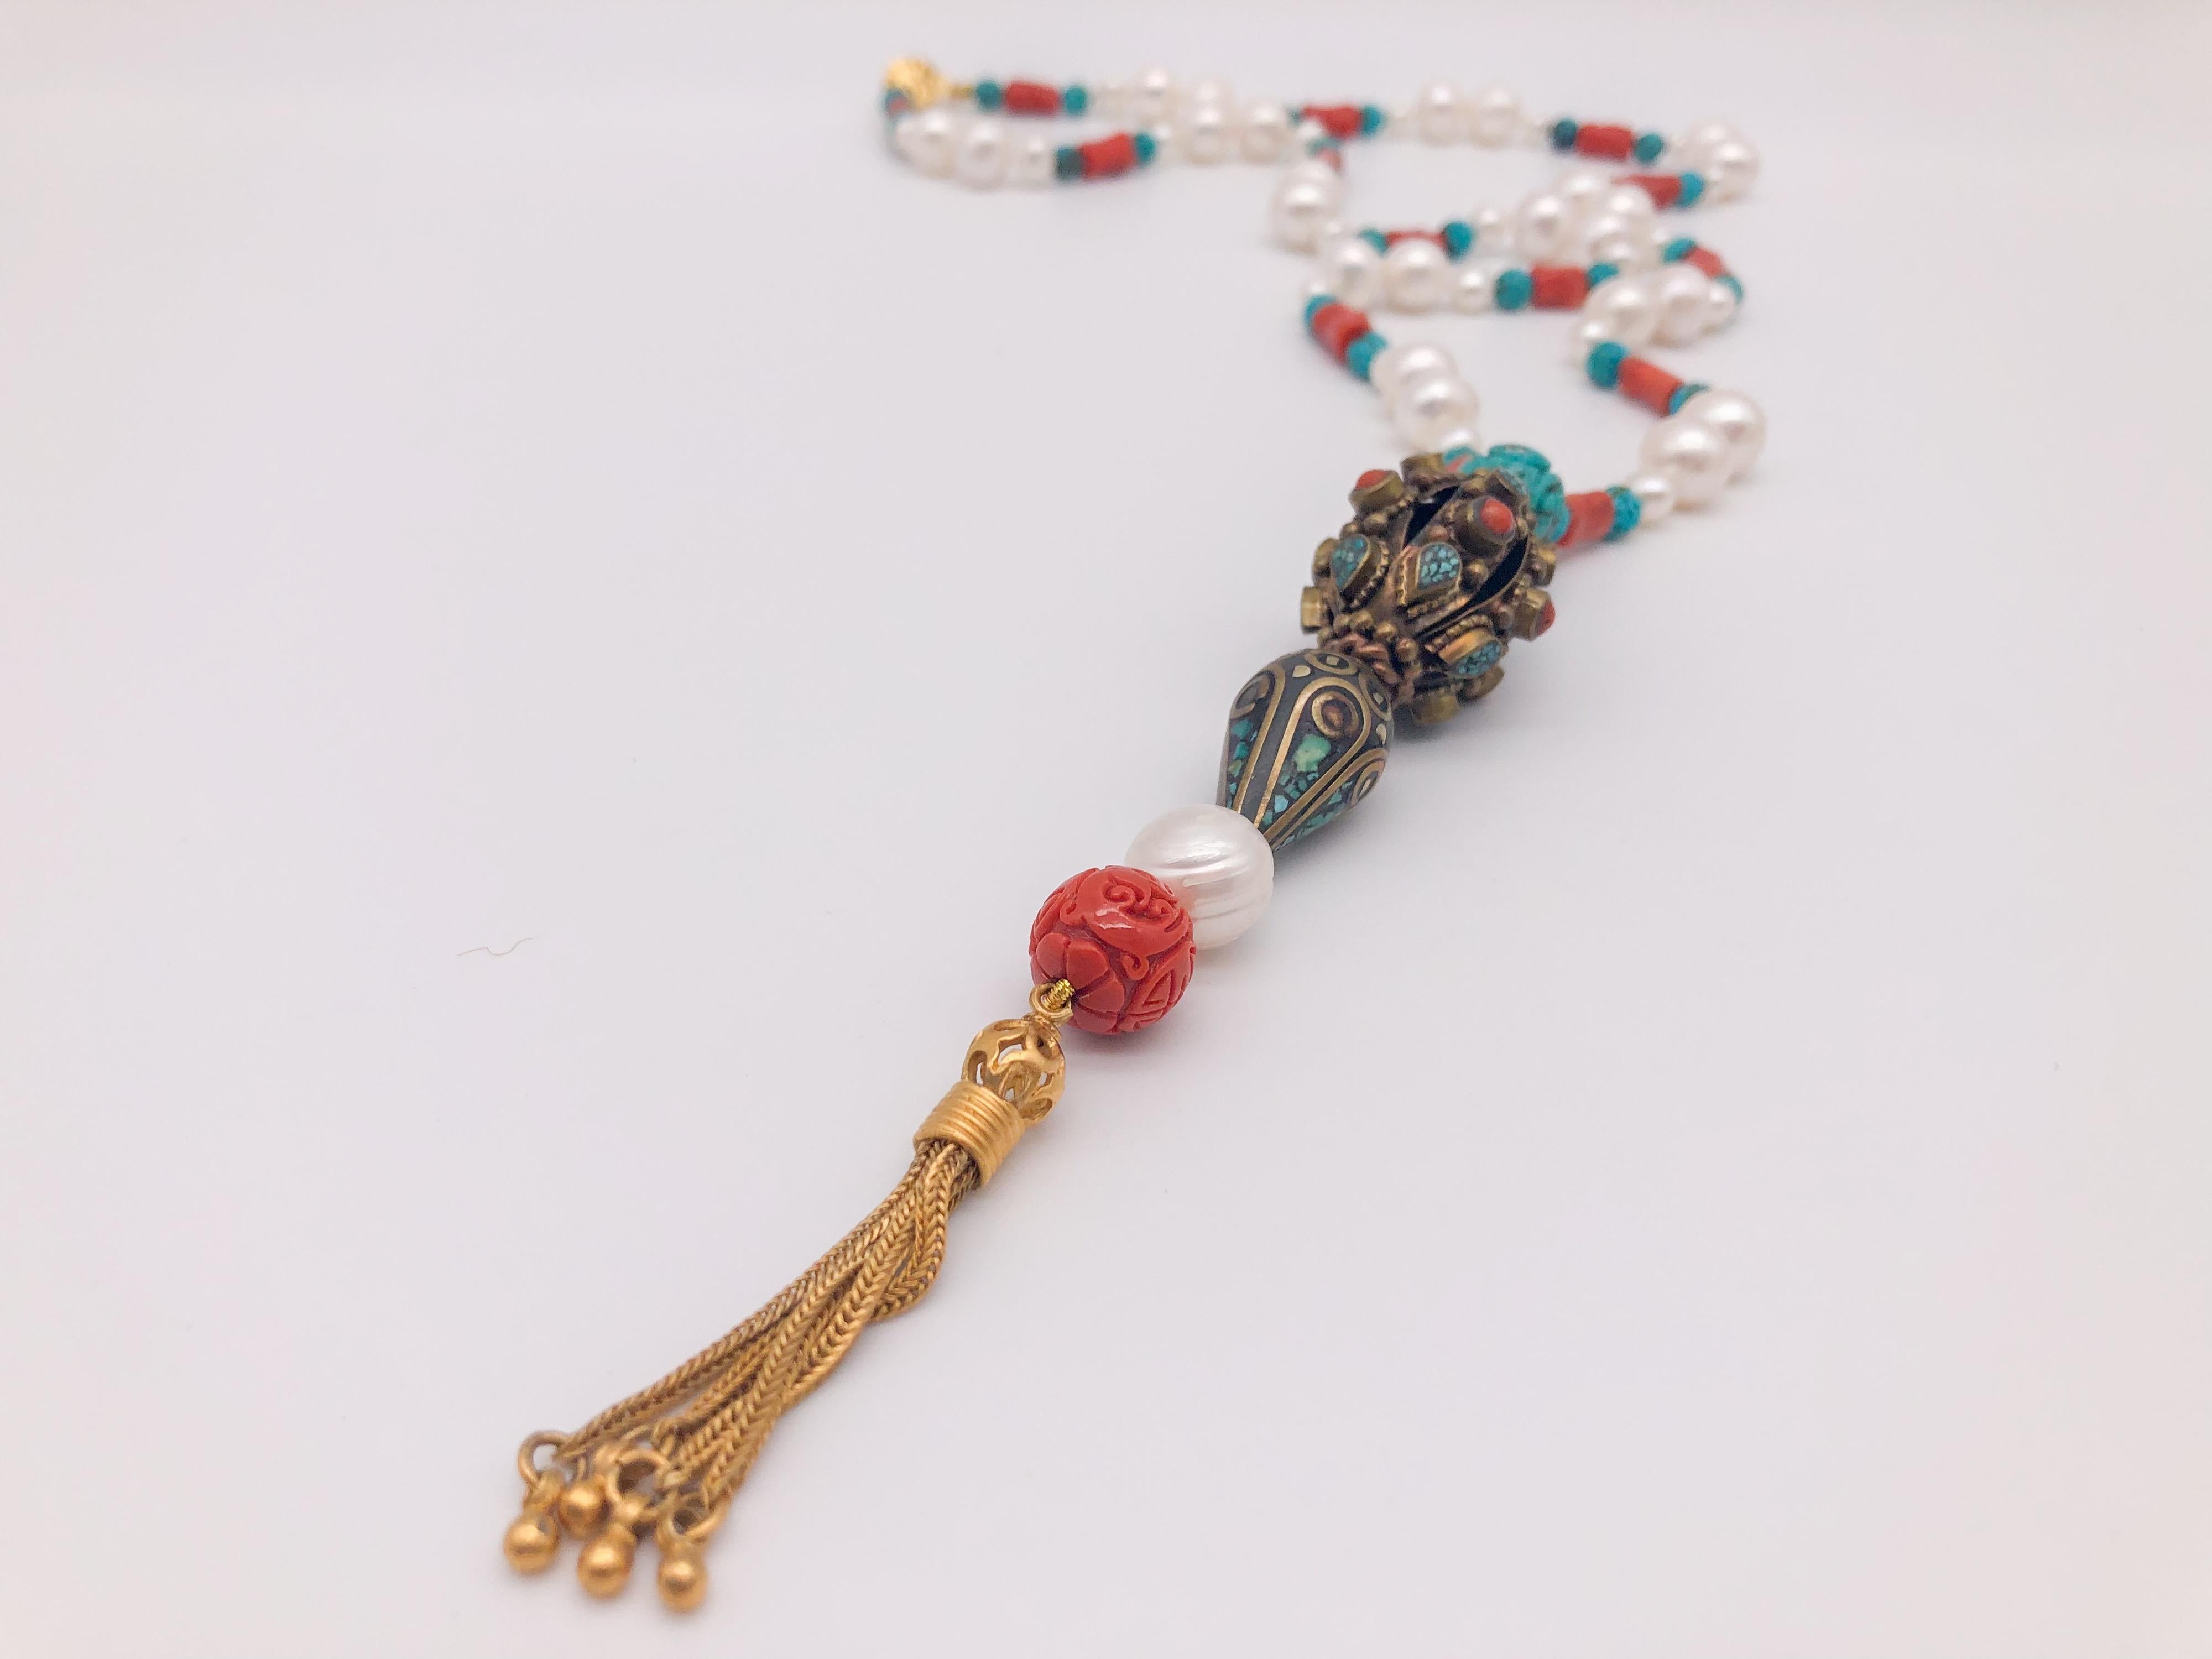 Mixed Cut A.Jeschel Elegant Long Pearl necklace with Tibetan Pendant. For Sale